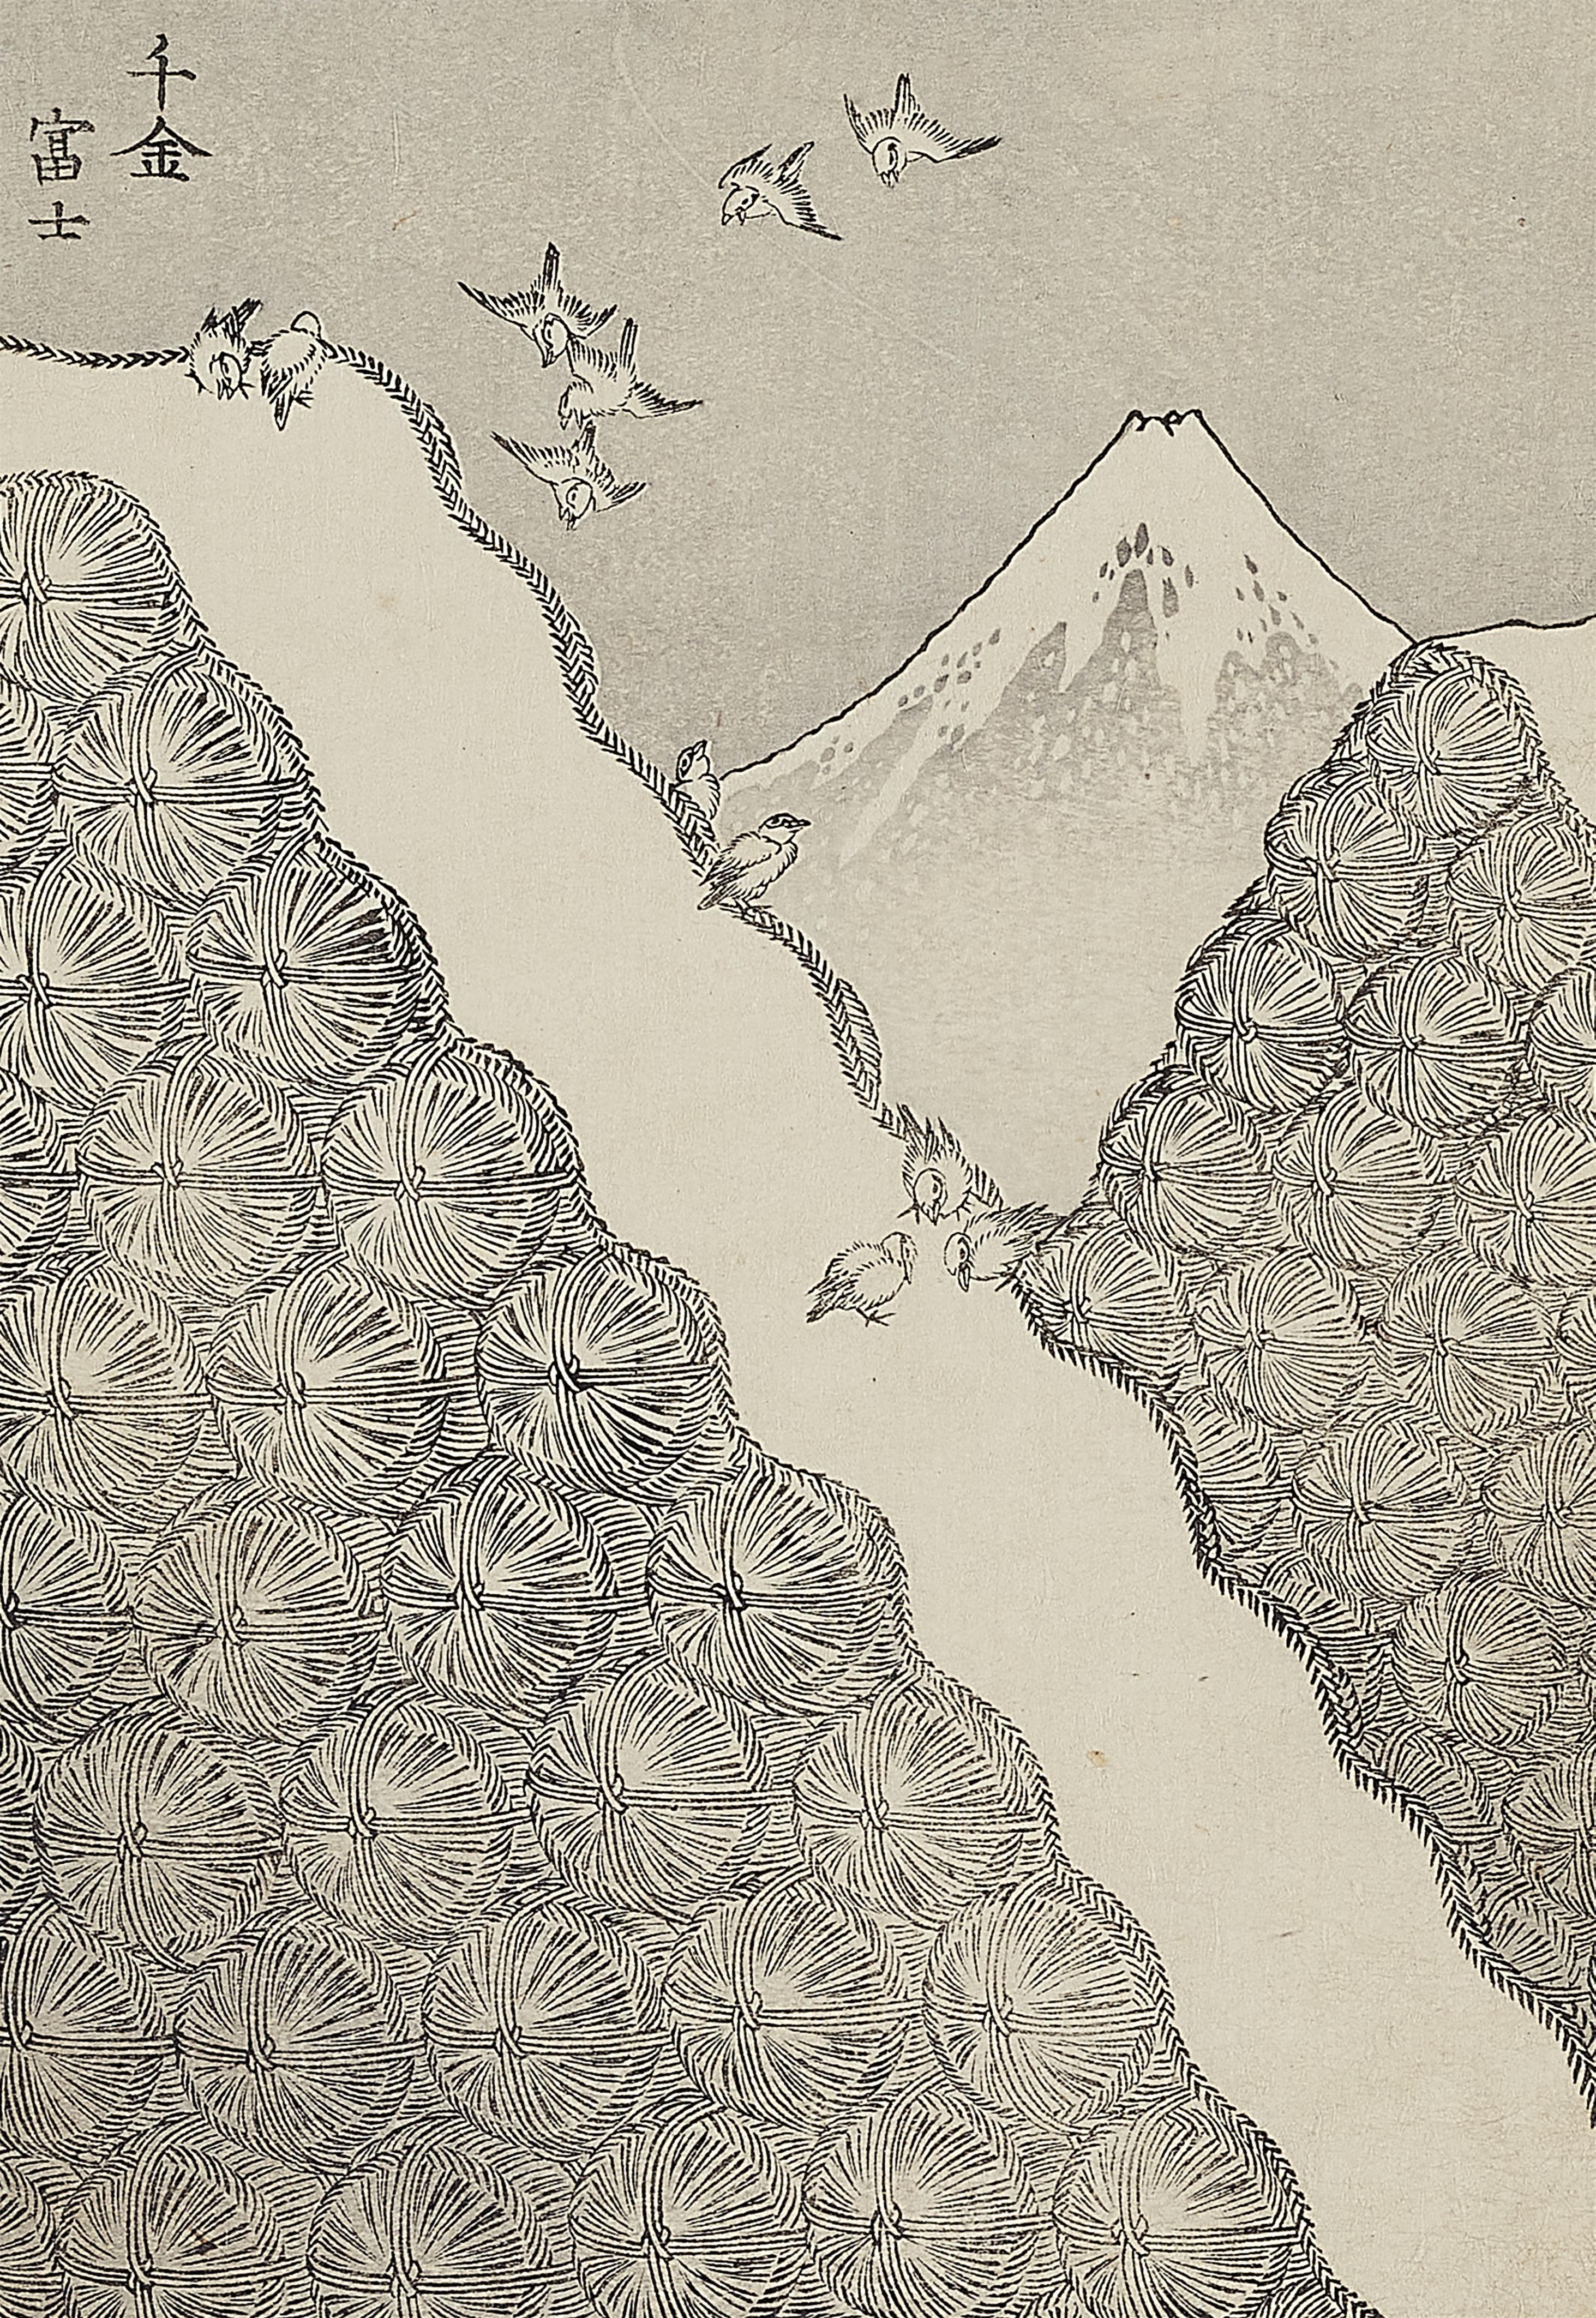 Katsushika Hokusai - Black and white illustrations from the album Fugaku hyakkei - image-29